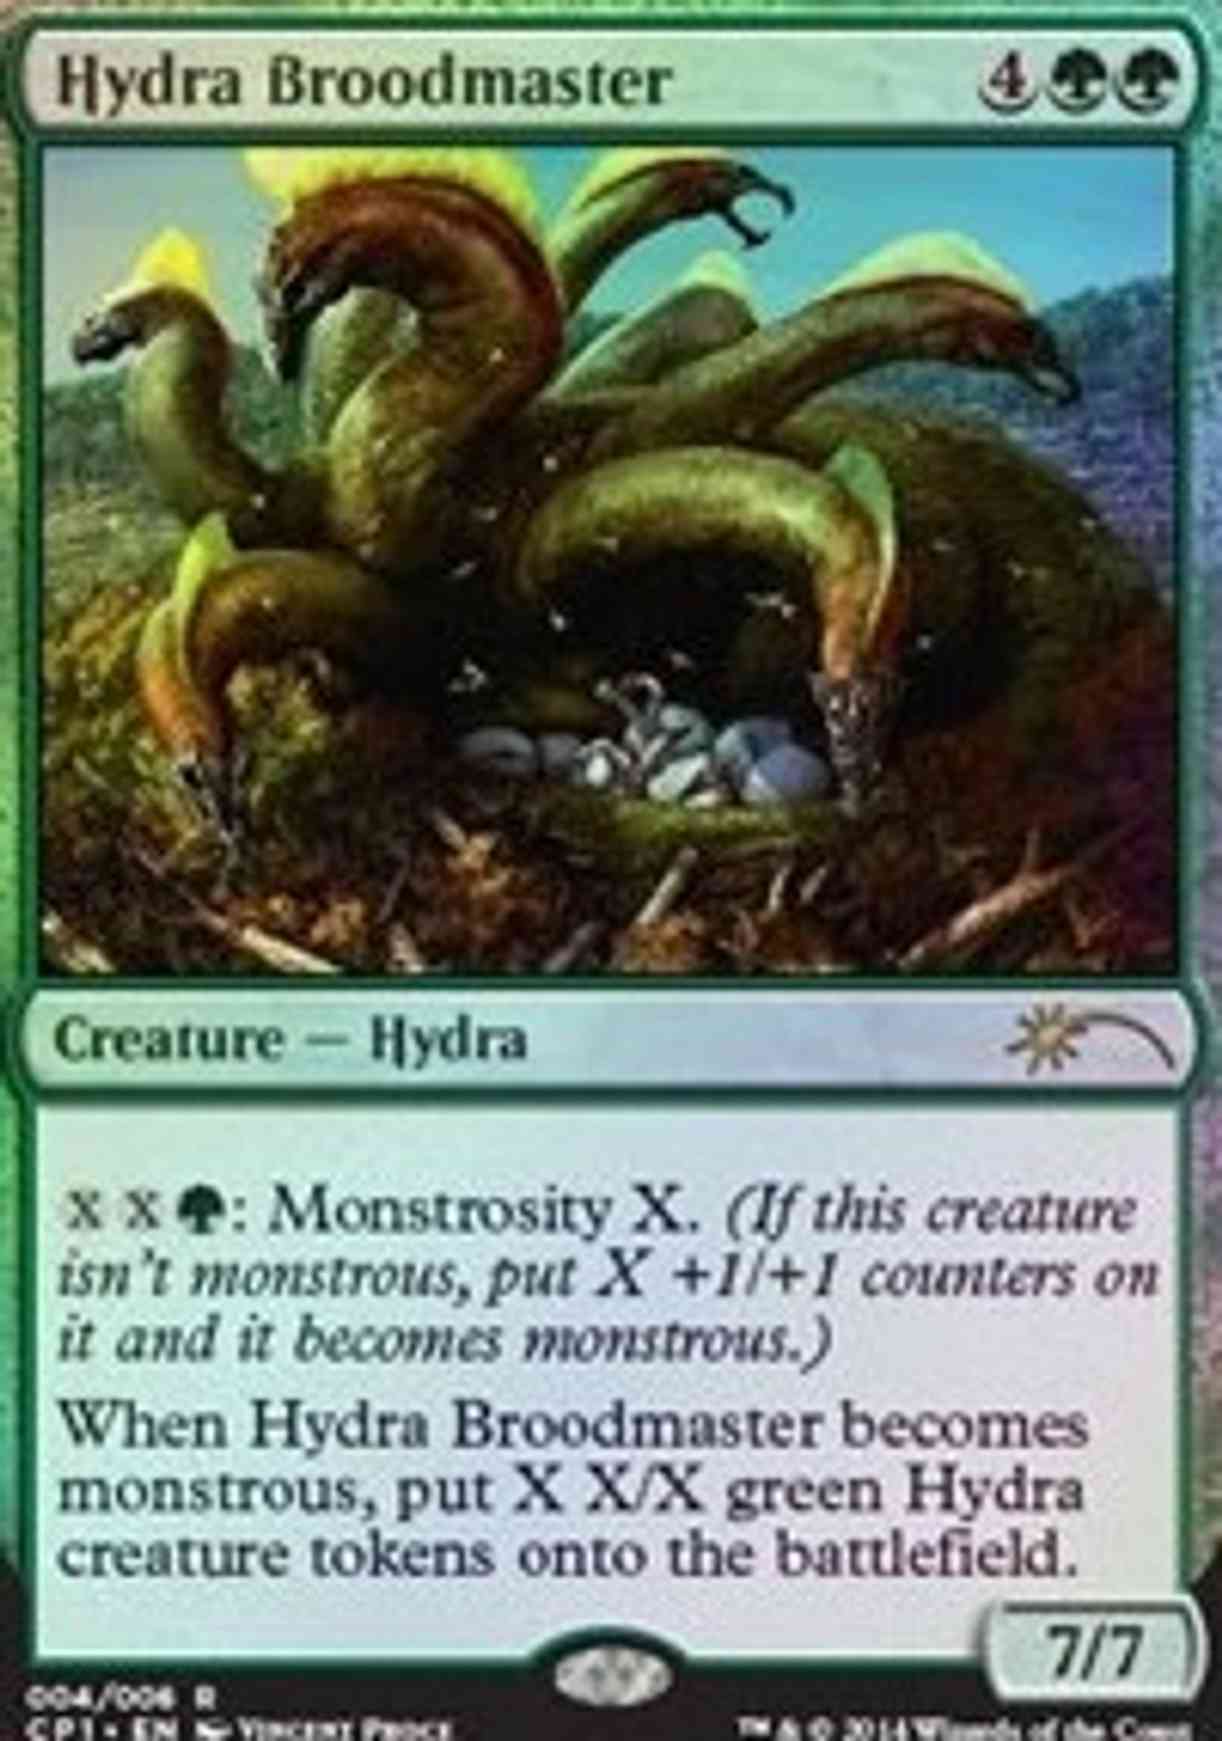 Hydra Broodmaster magic card front